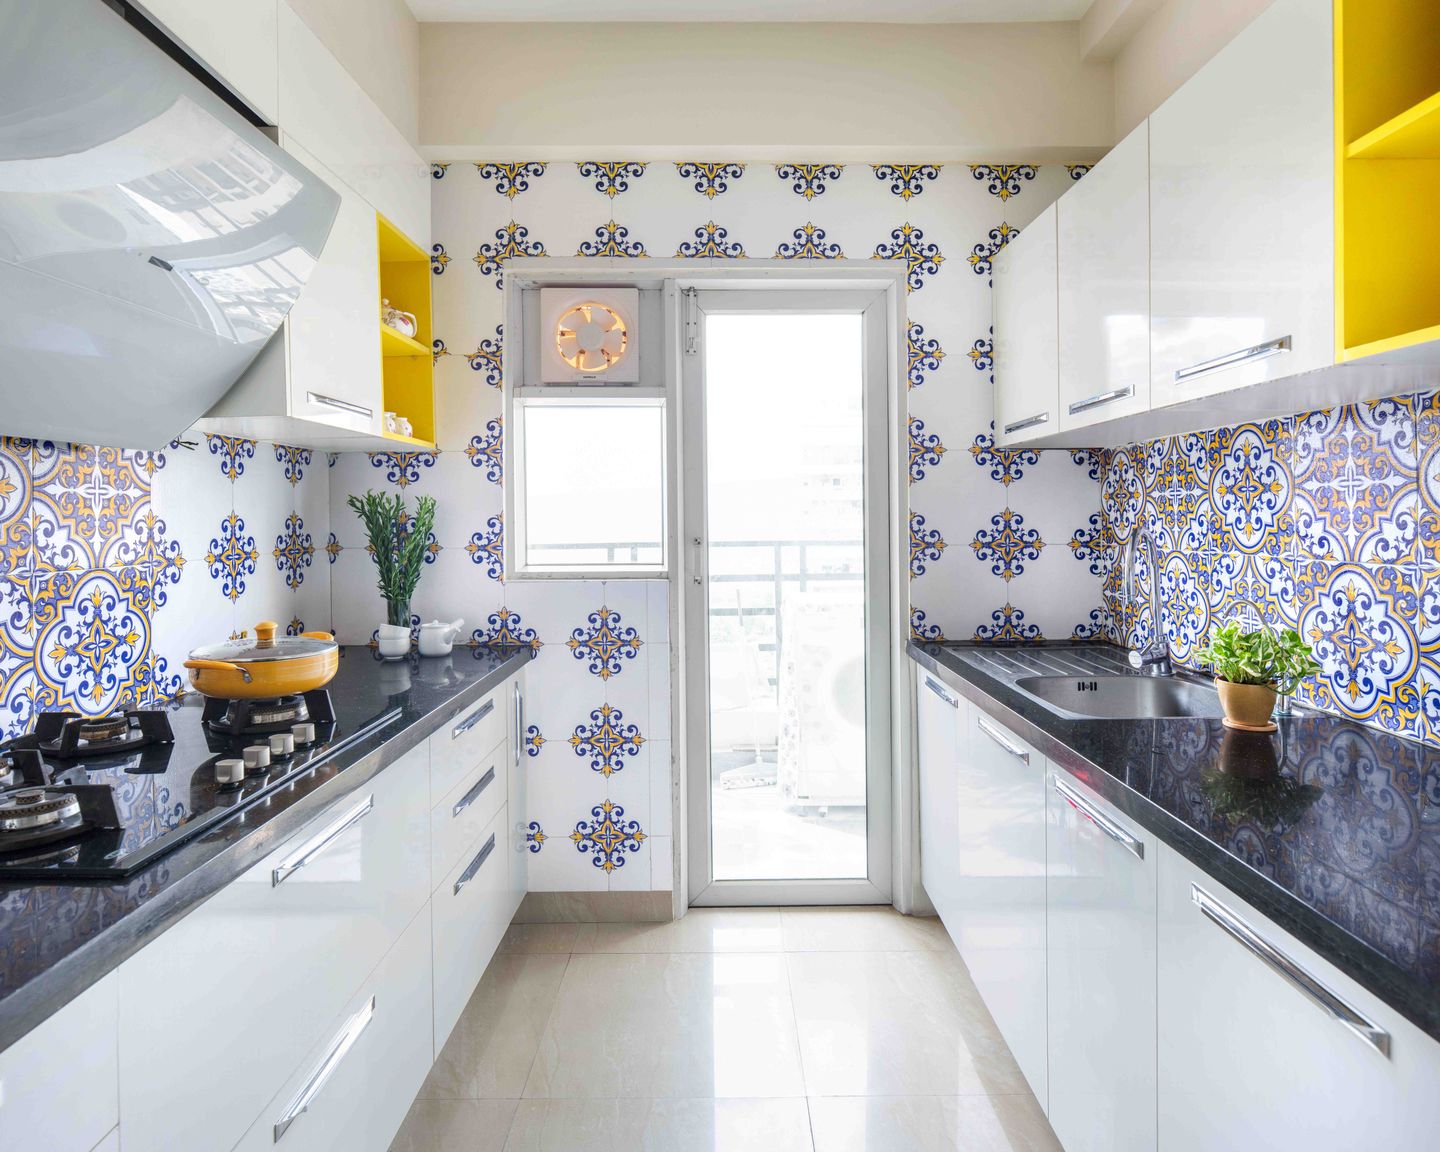 White Parallel Kitchen Design With Geometric Backsplash - Livspace